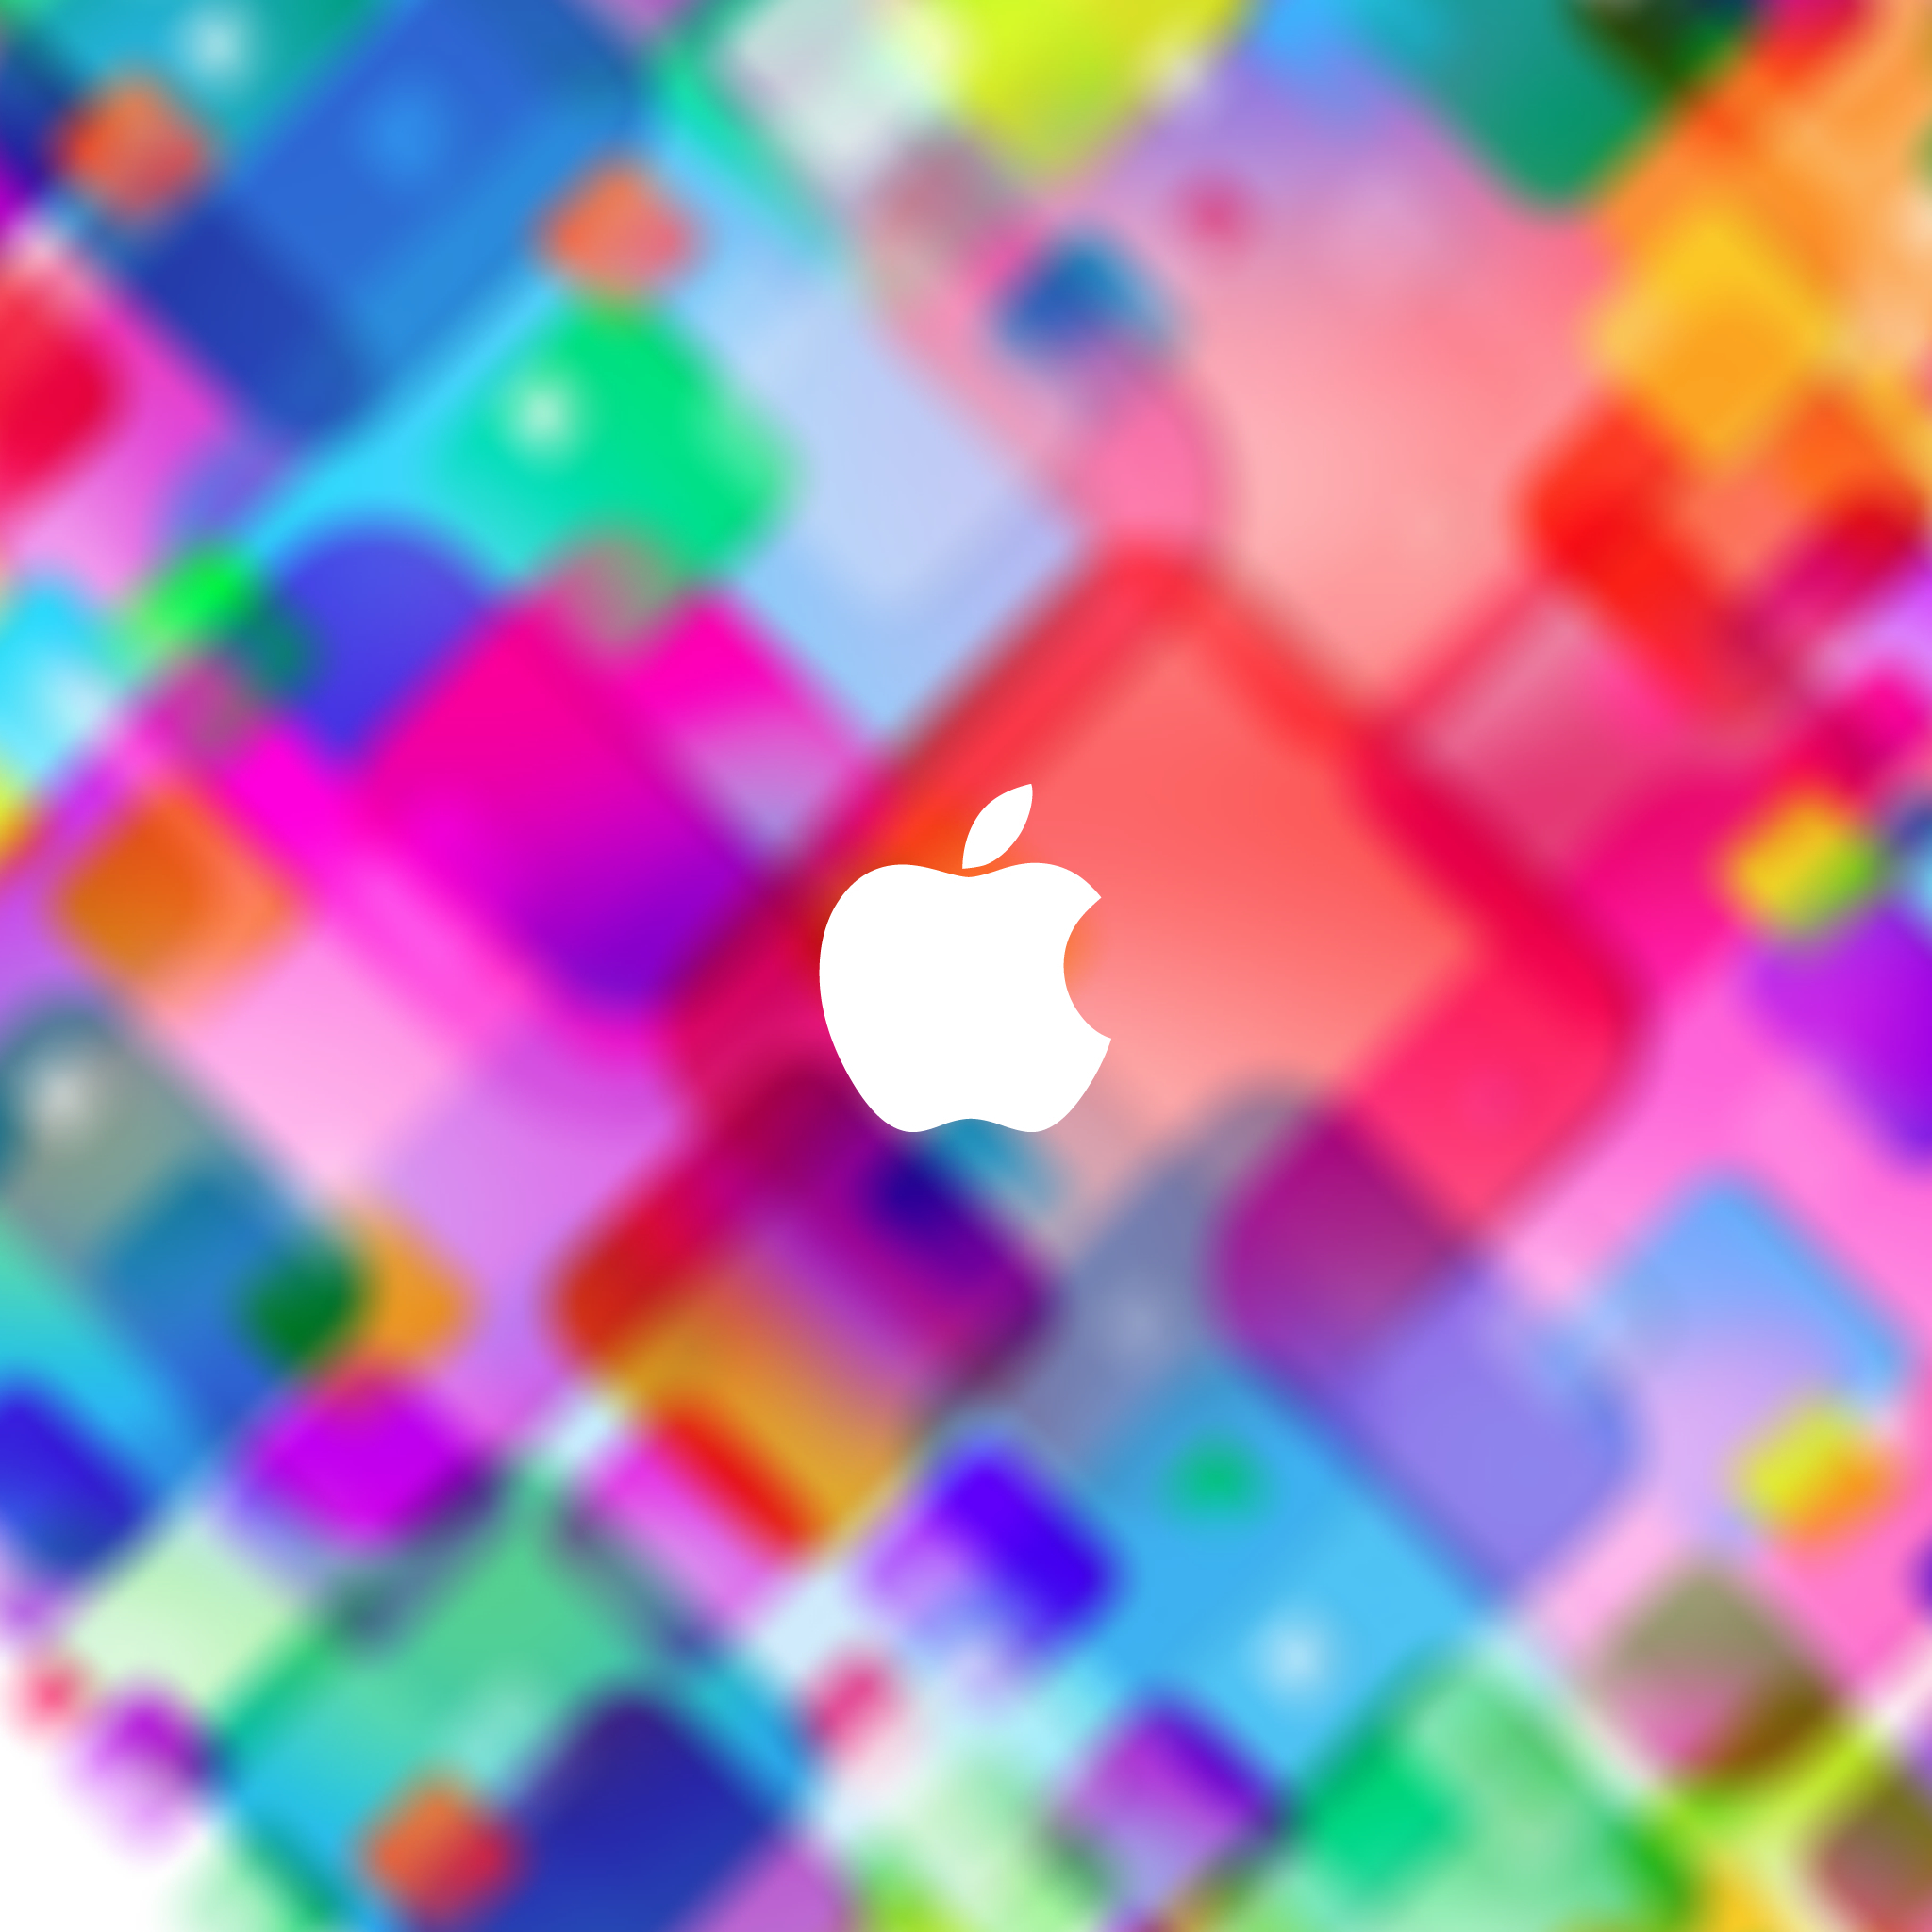 iOS 9 Wallpapers iPad - WallpaperSafari